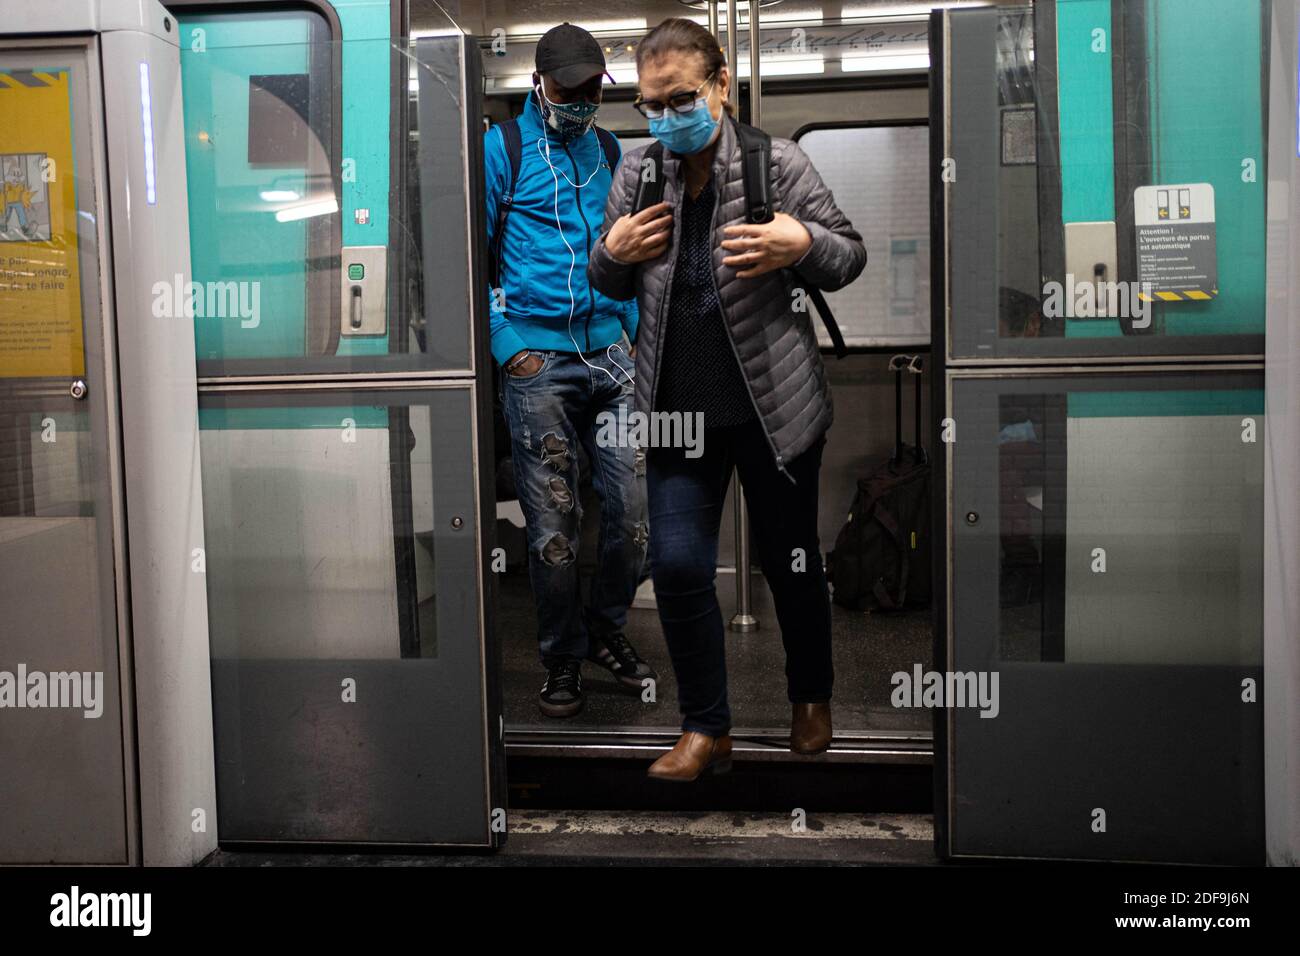 People take the line 13 of the Paris metro subway during the lockdown due to the Coronavirus Covid-19. Paris, France, April 30, 2020. Photo by Florent Bardos/ABACAPRESS.COM Stock Photo